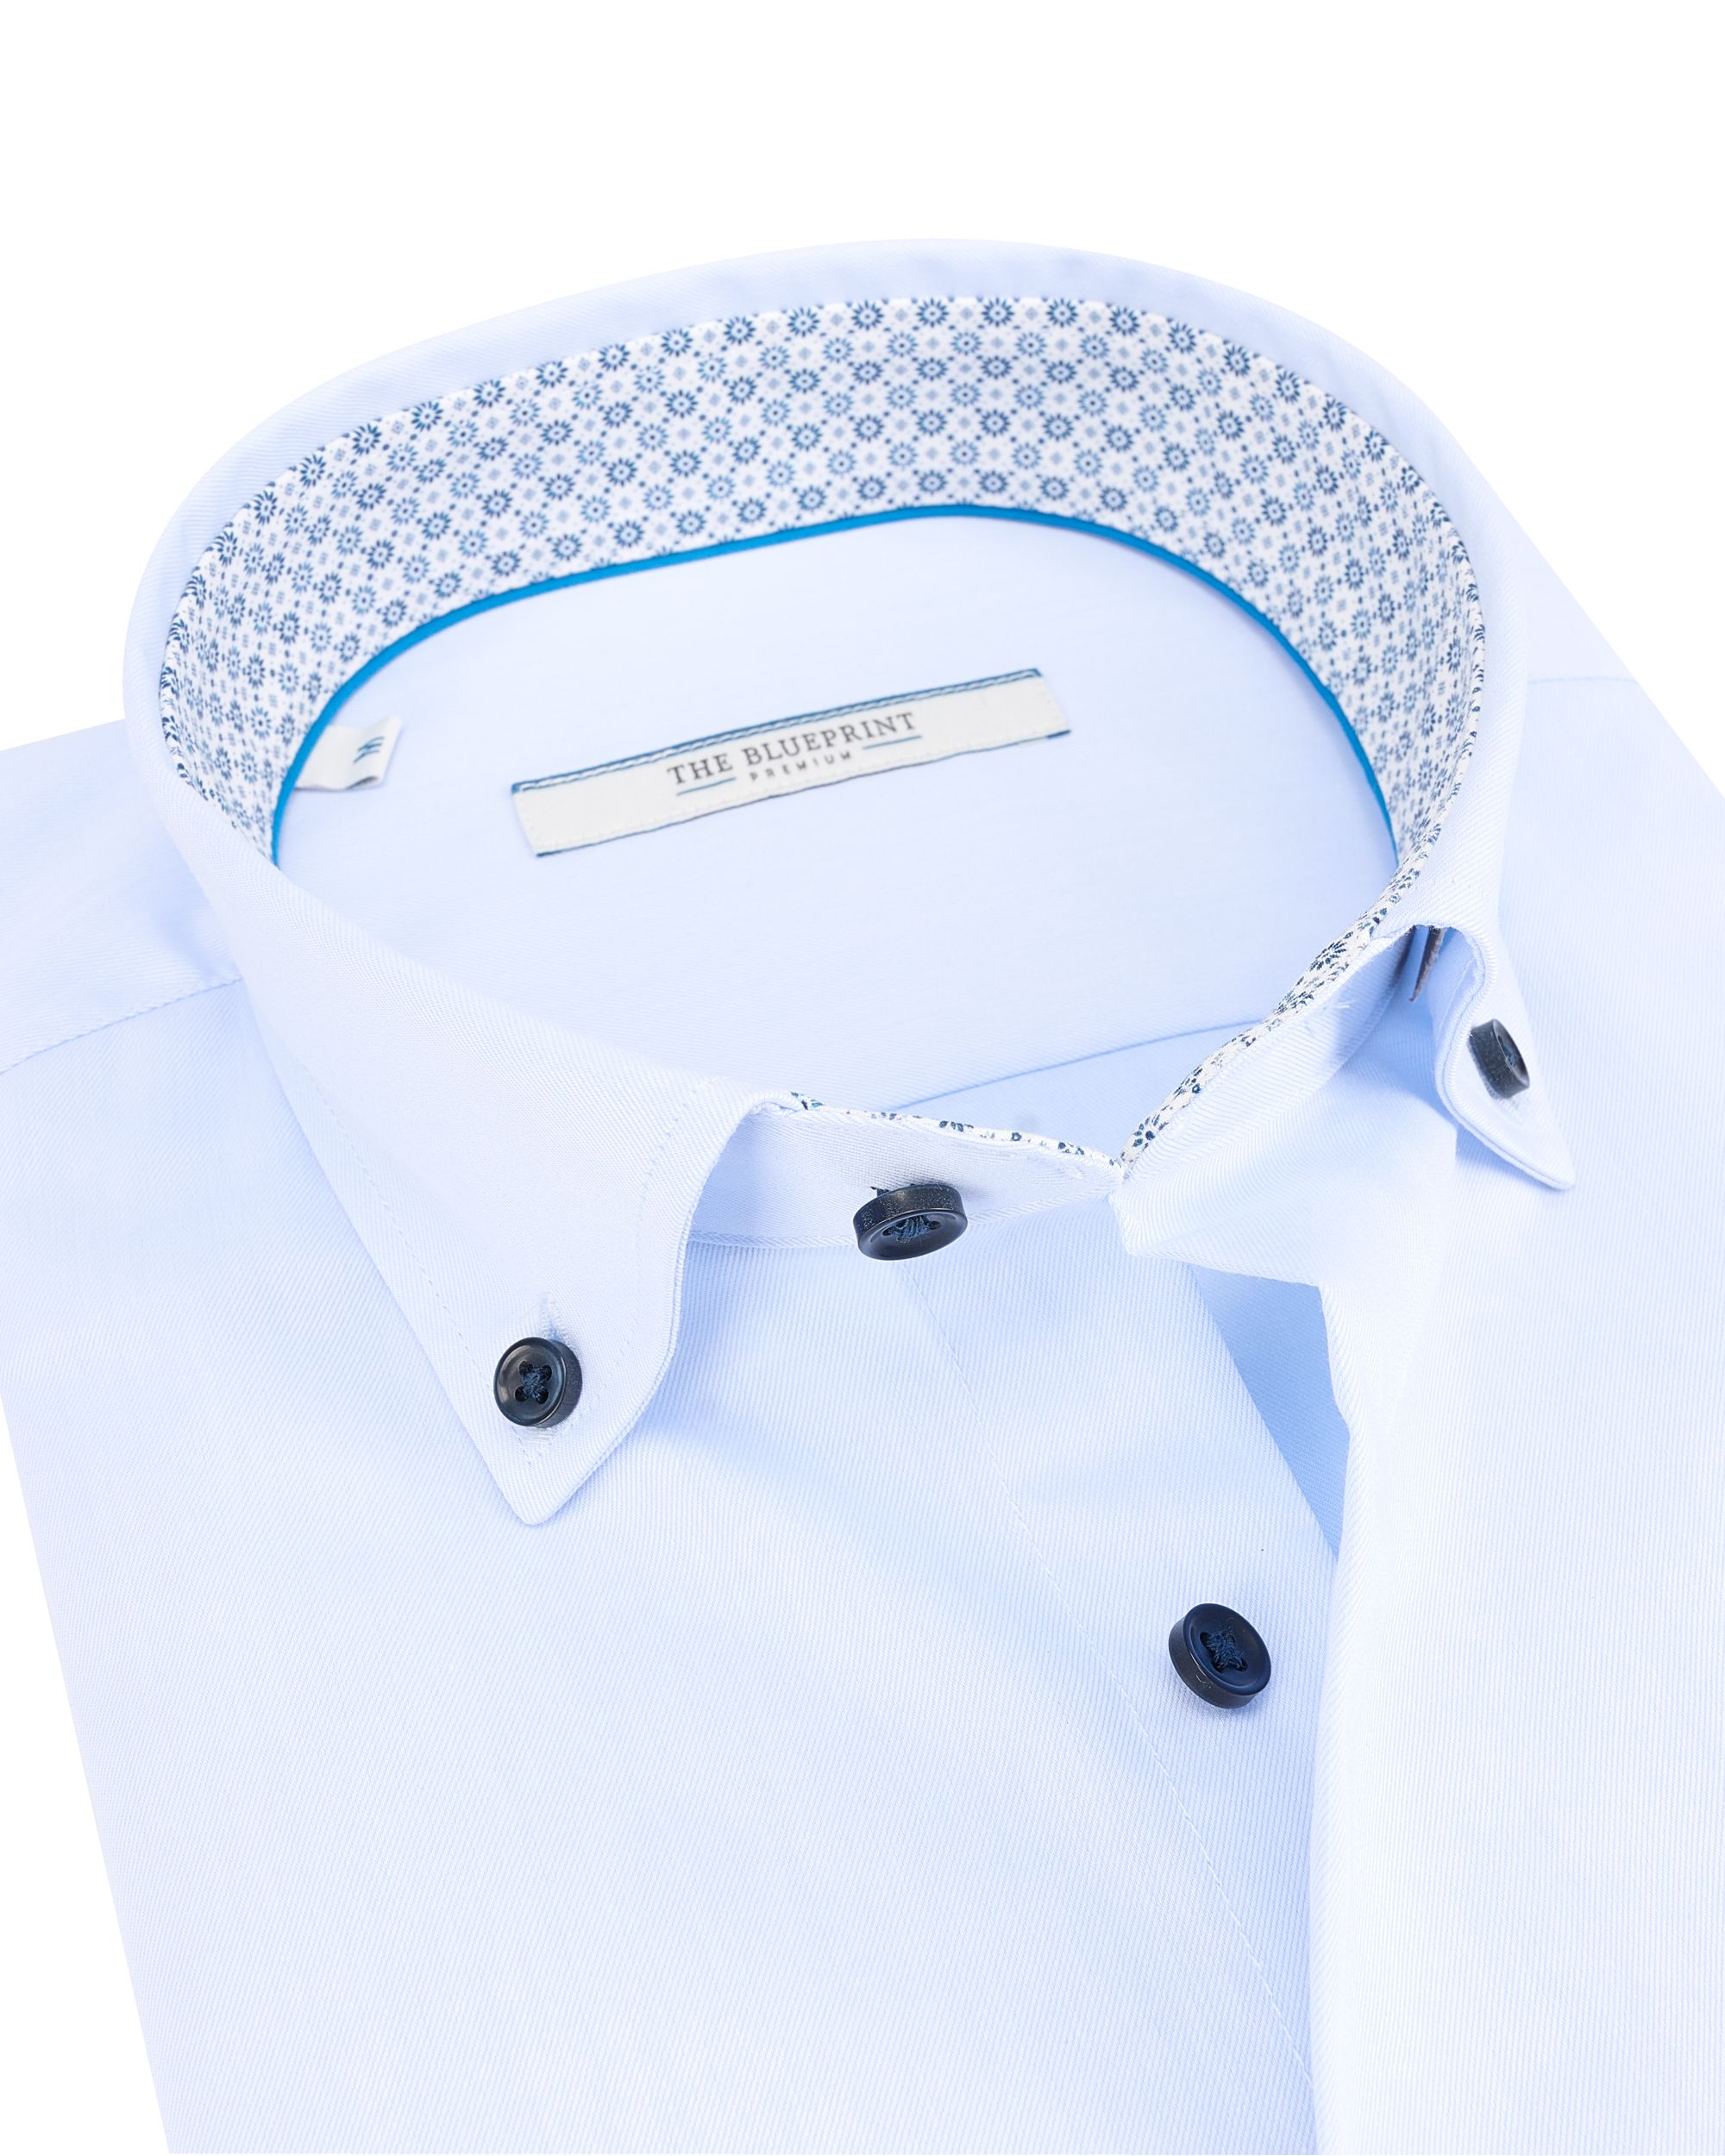 The BLUEPRINT Premium - Trendy Overhemd LM Lichtblauw uni 094226-001-L